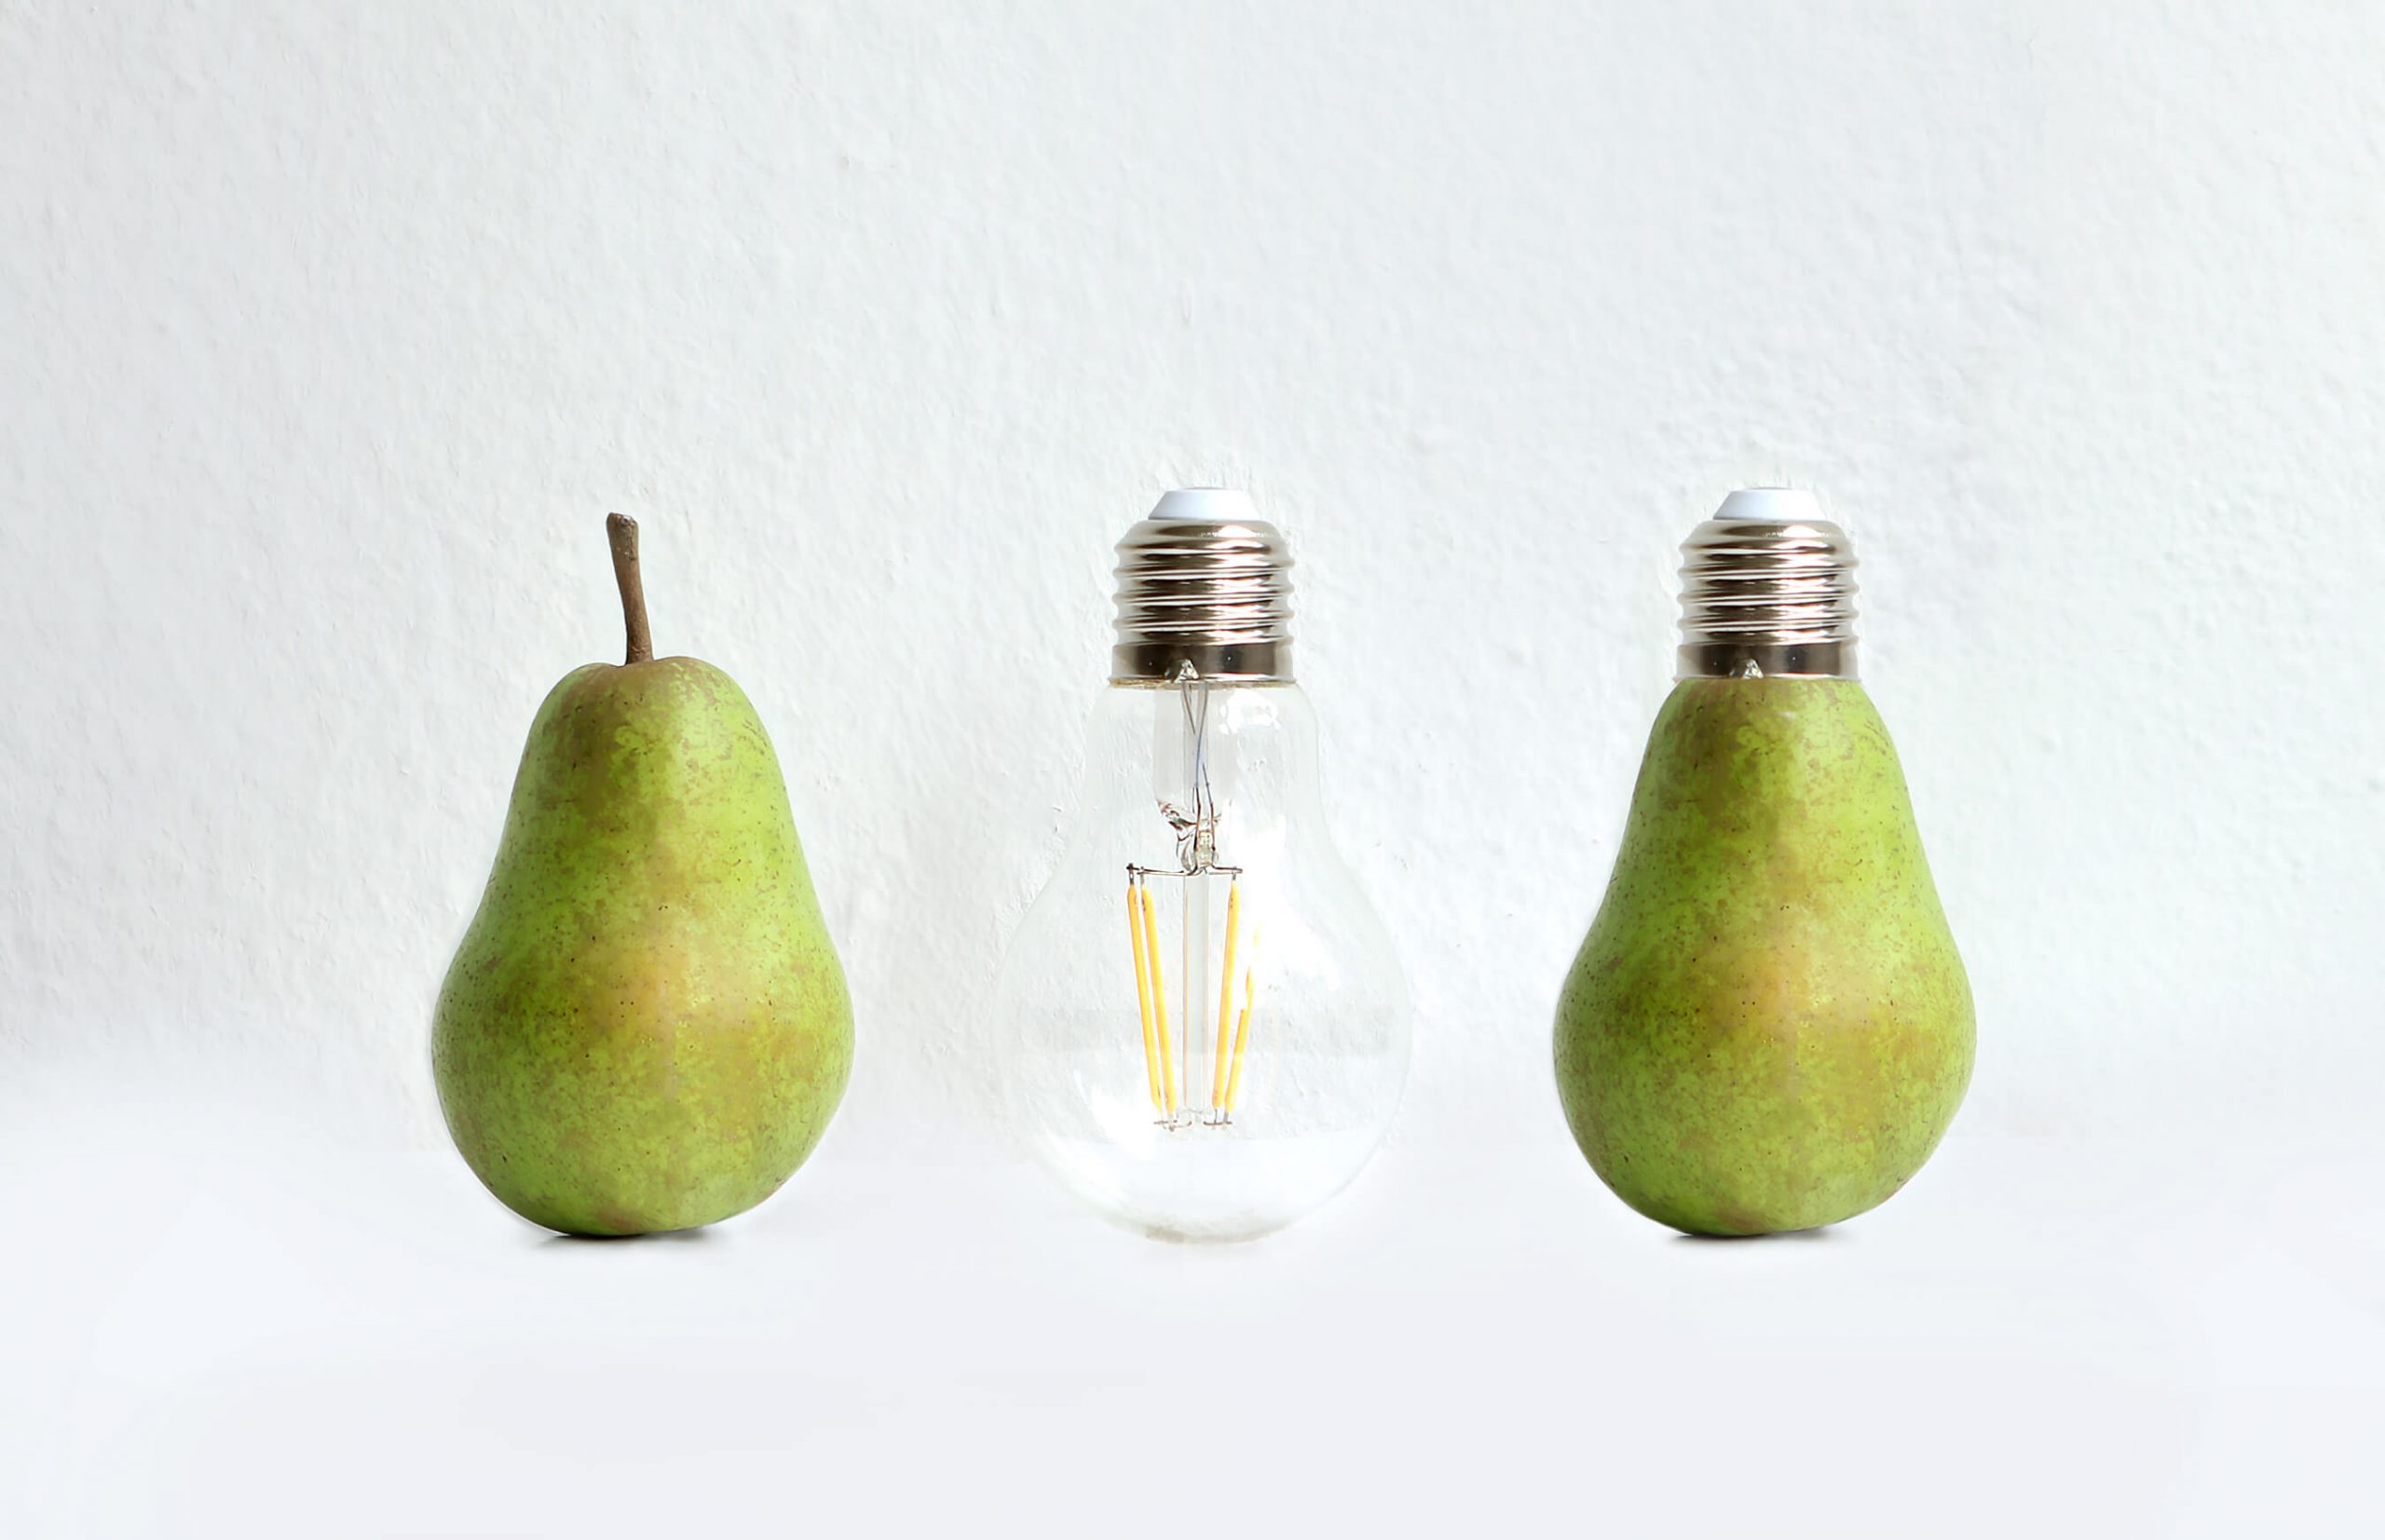 2 pears and a lightbulb